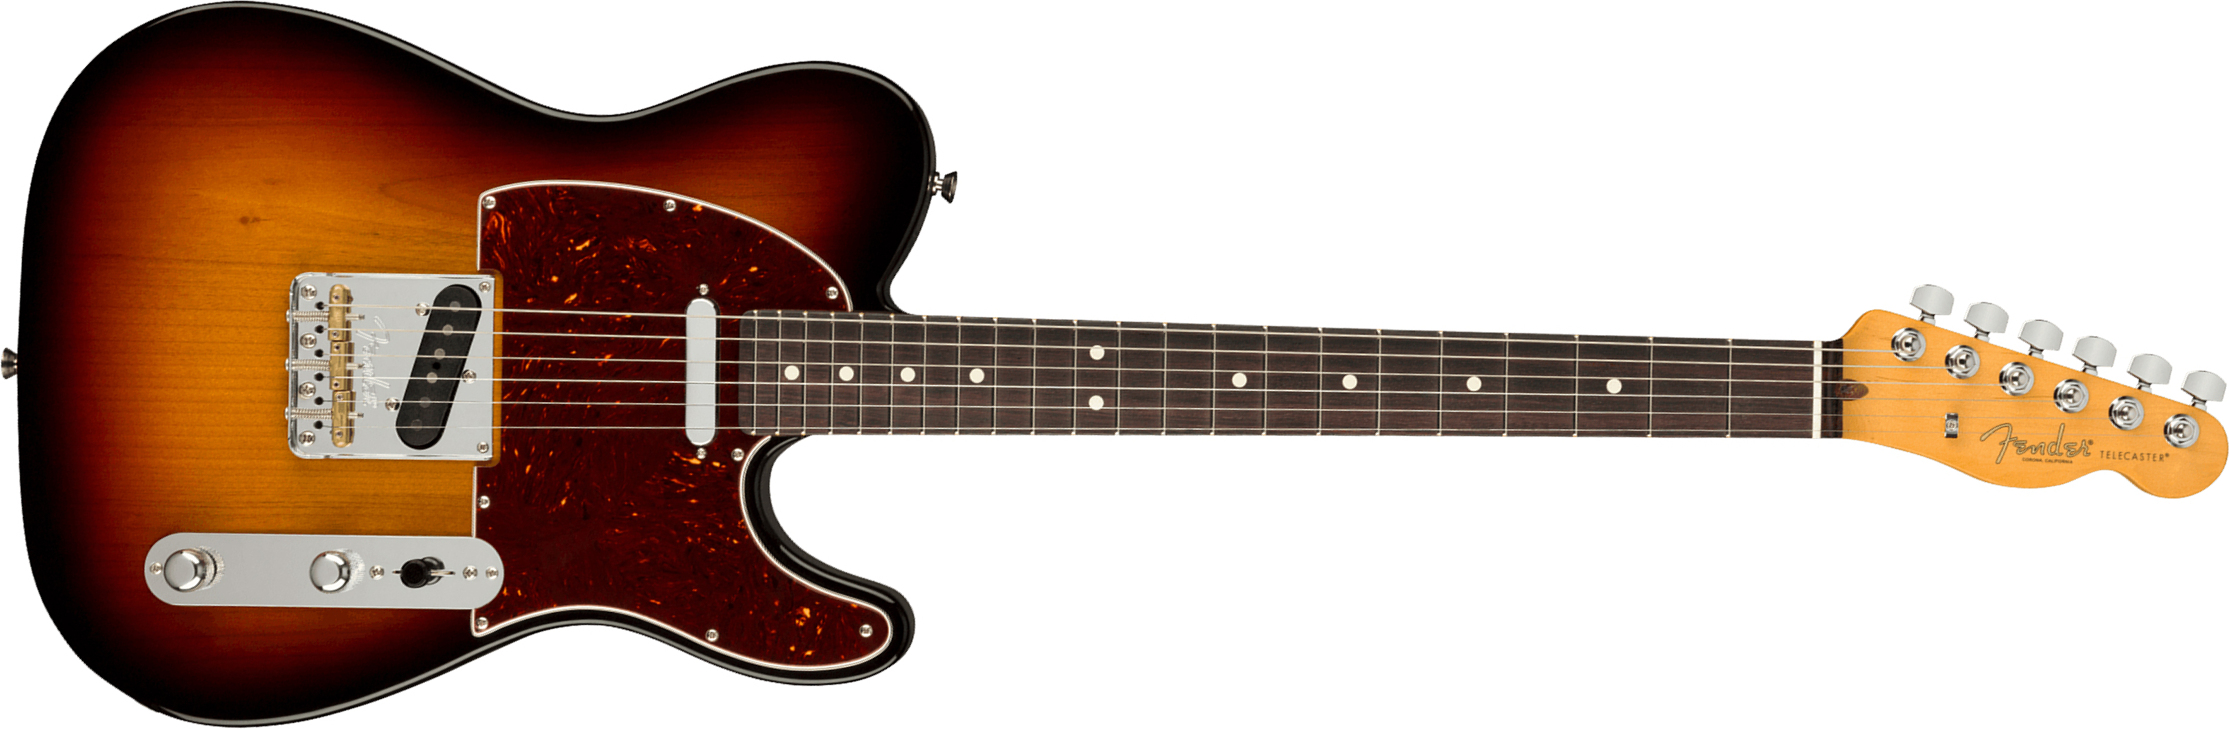 Fender Tele American Professional Ii Usa Rw - 3-color Sunburst - Tel shape electric guitar - Main picture